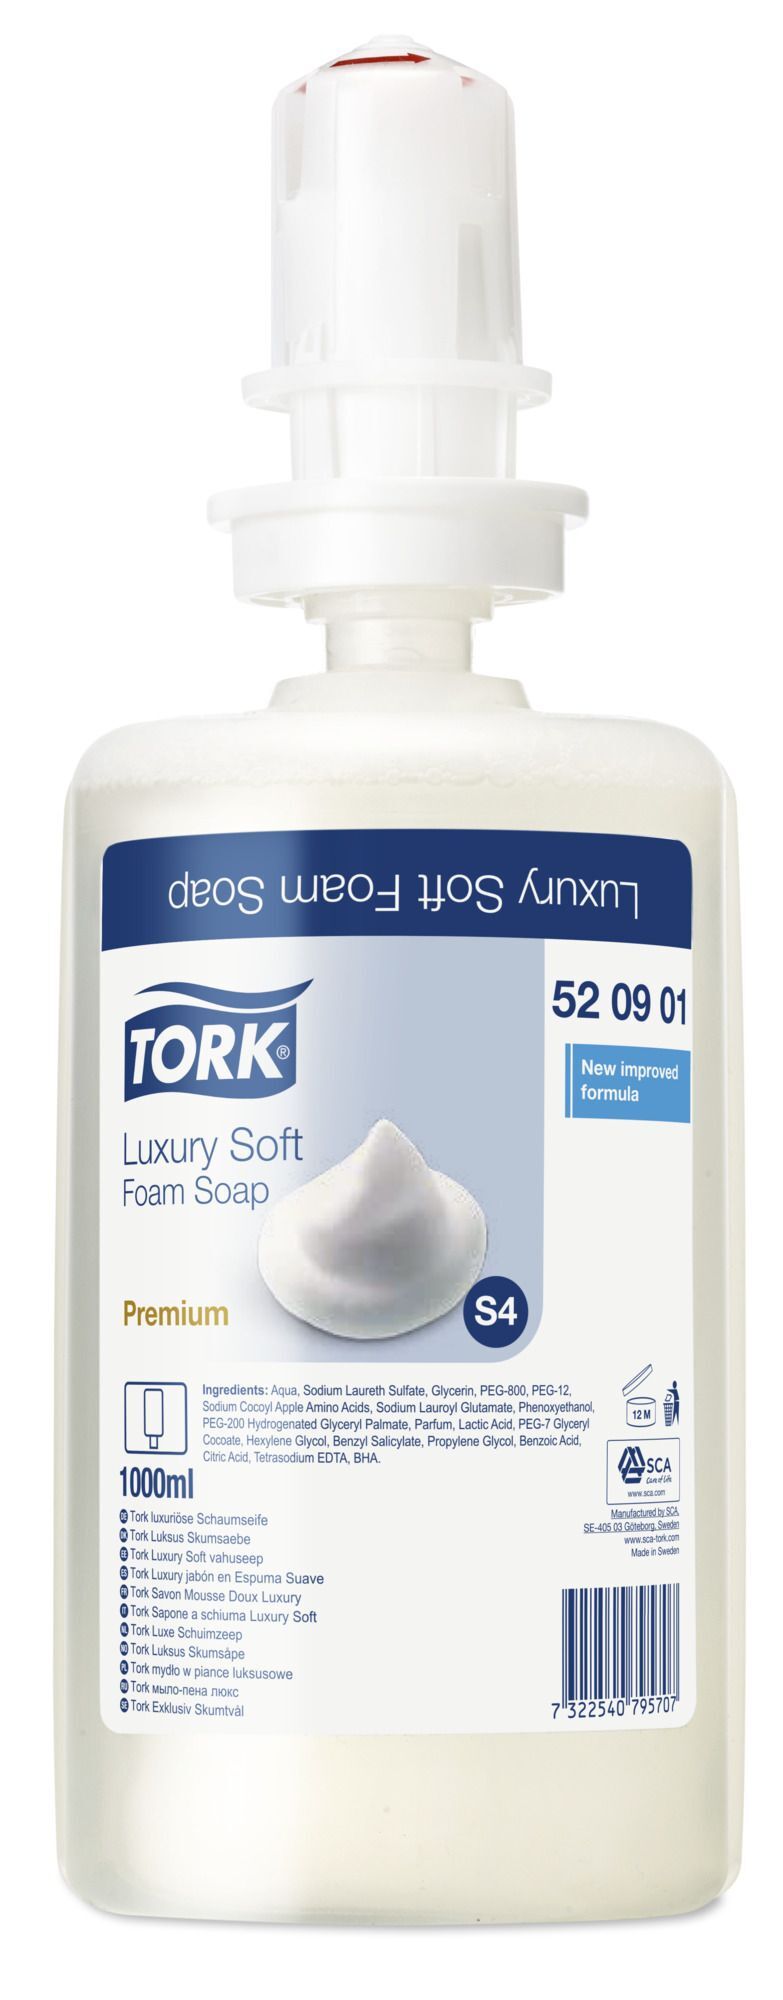 520901 Тоrk Premium мыло-пена люкс